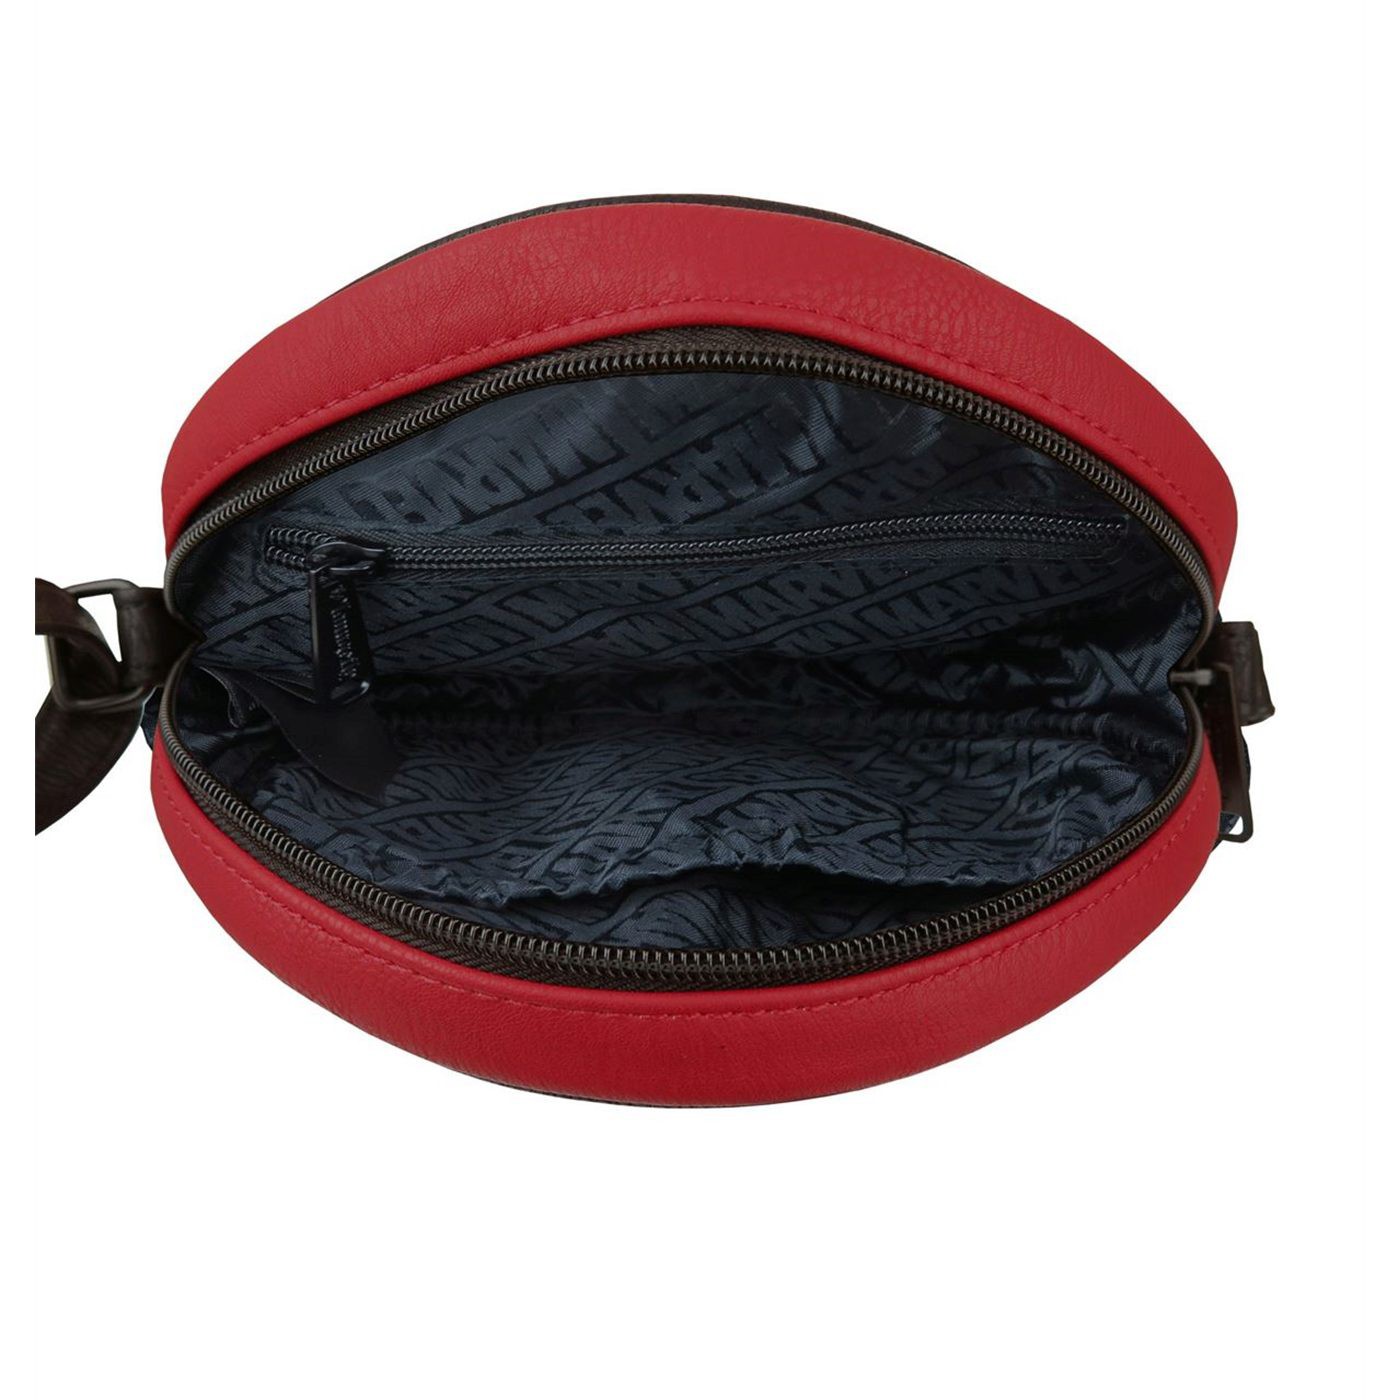 Deadpool Faux Leather Loungefly Cross Body Handbag